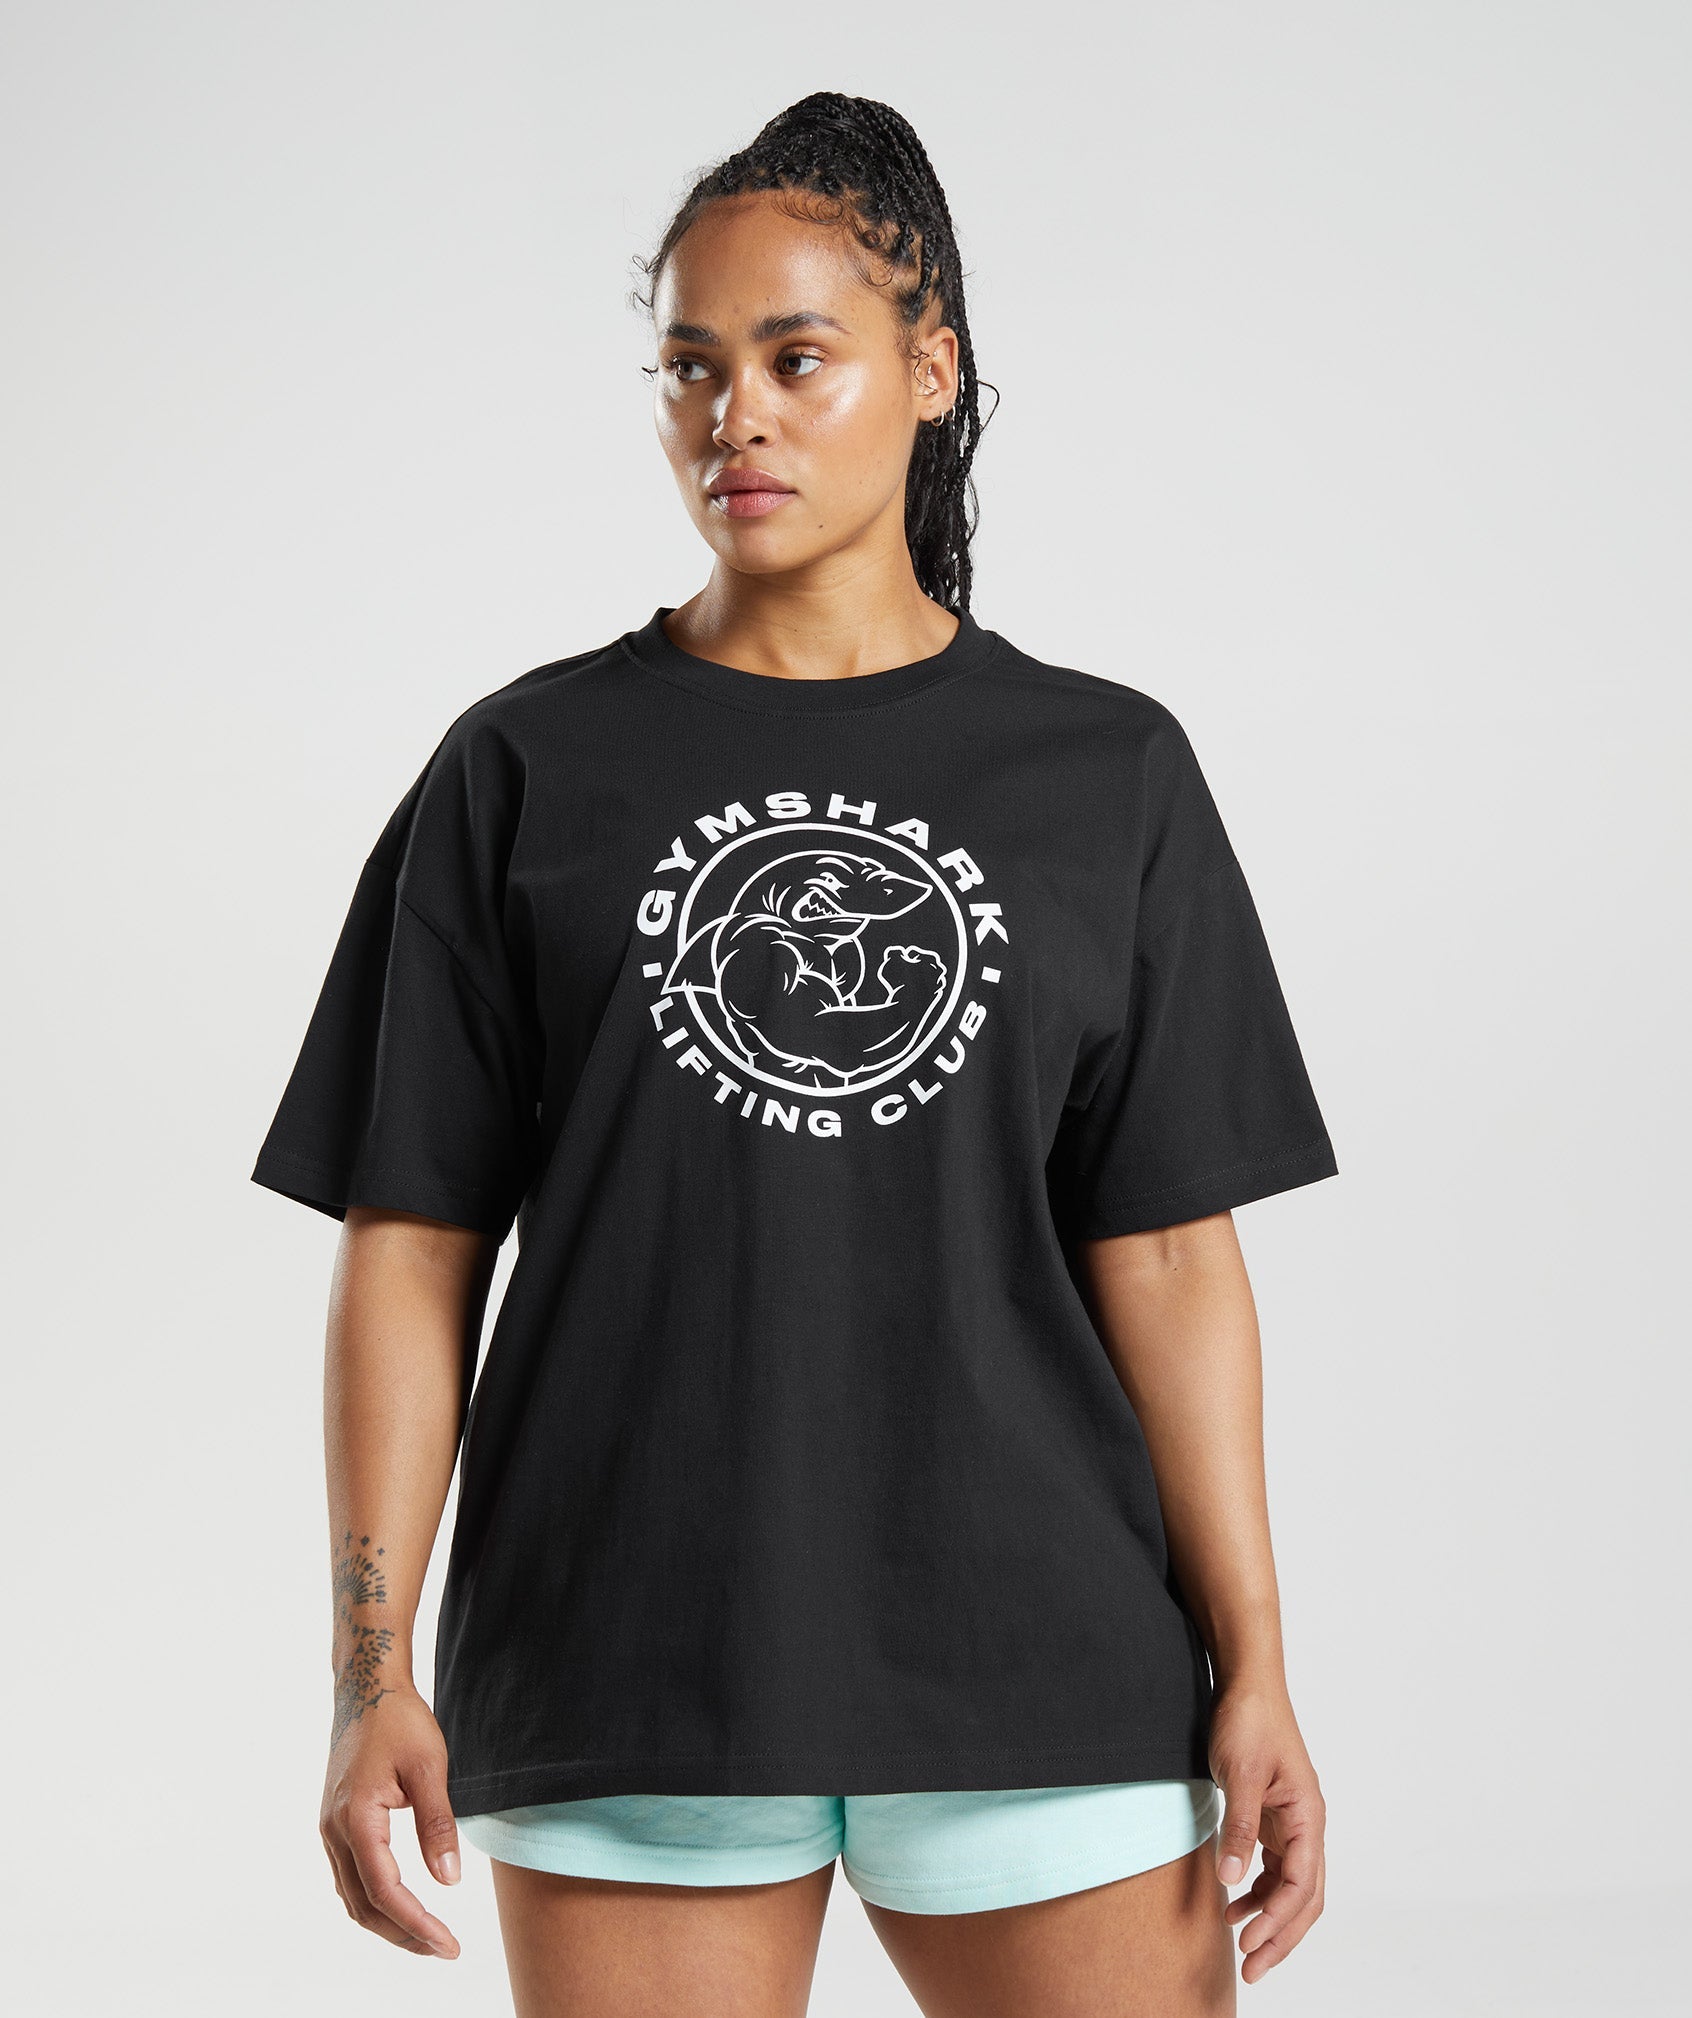 Size t-shirt oversized : r/Gymshark